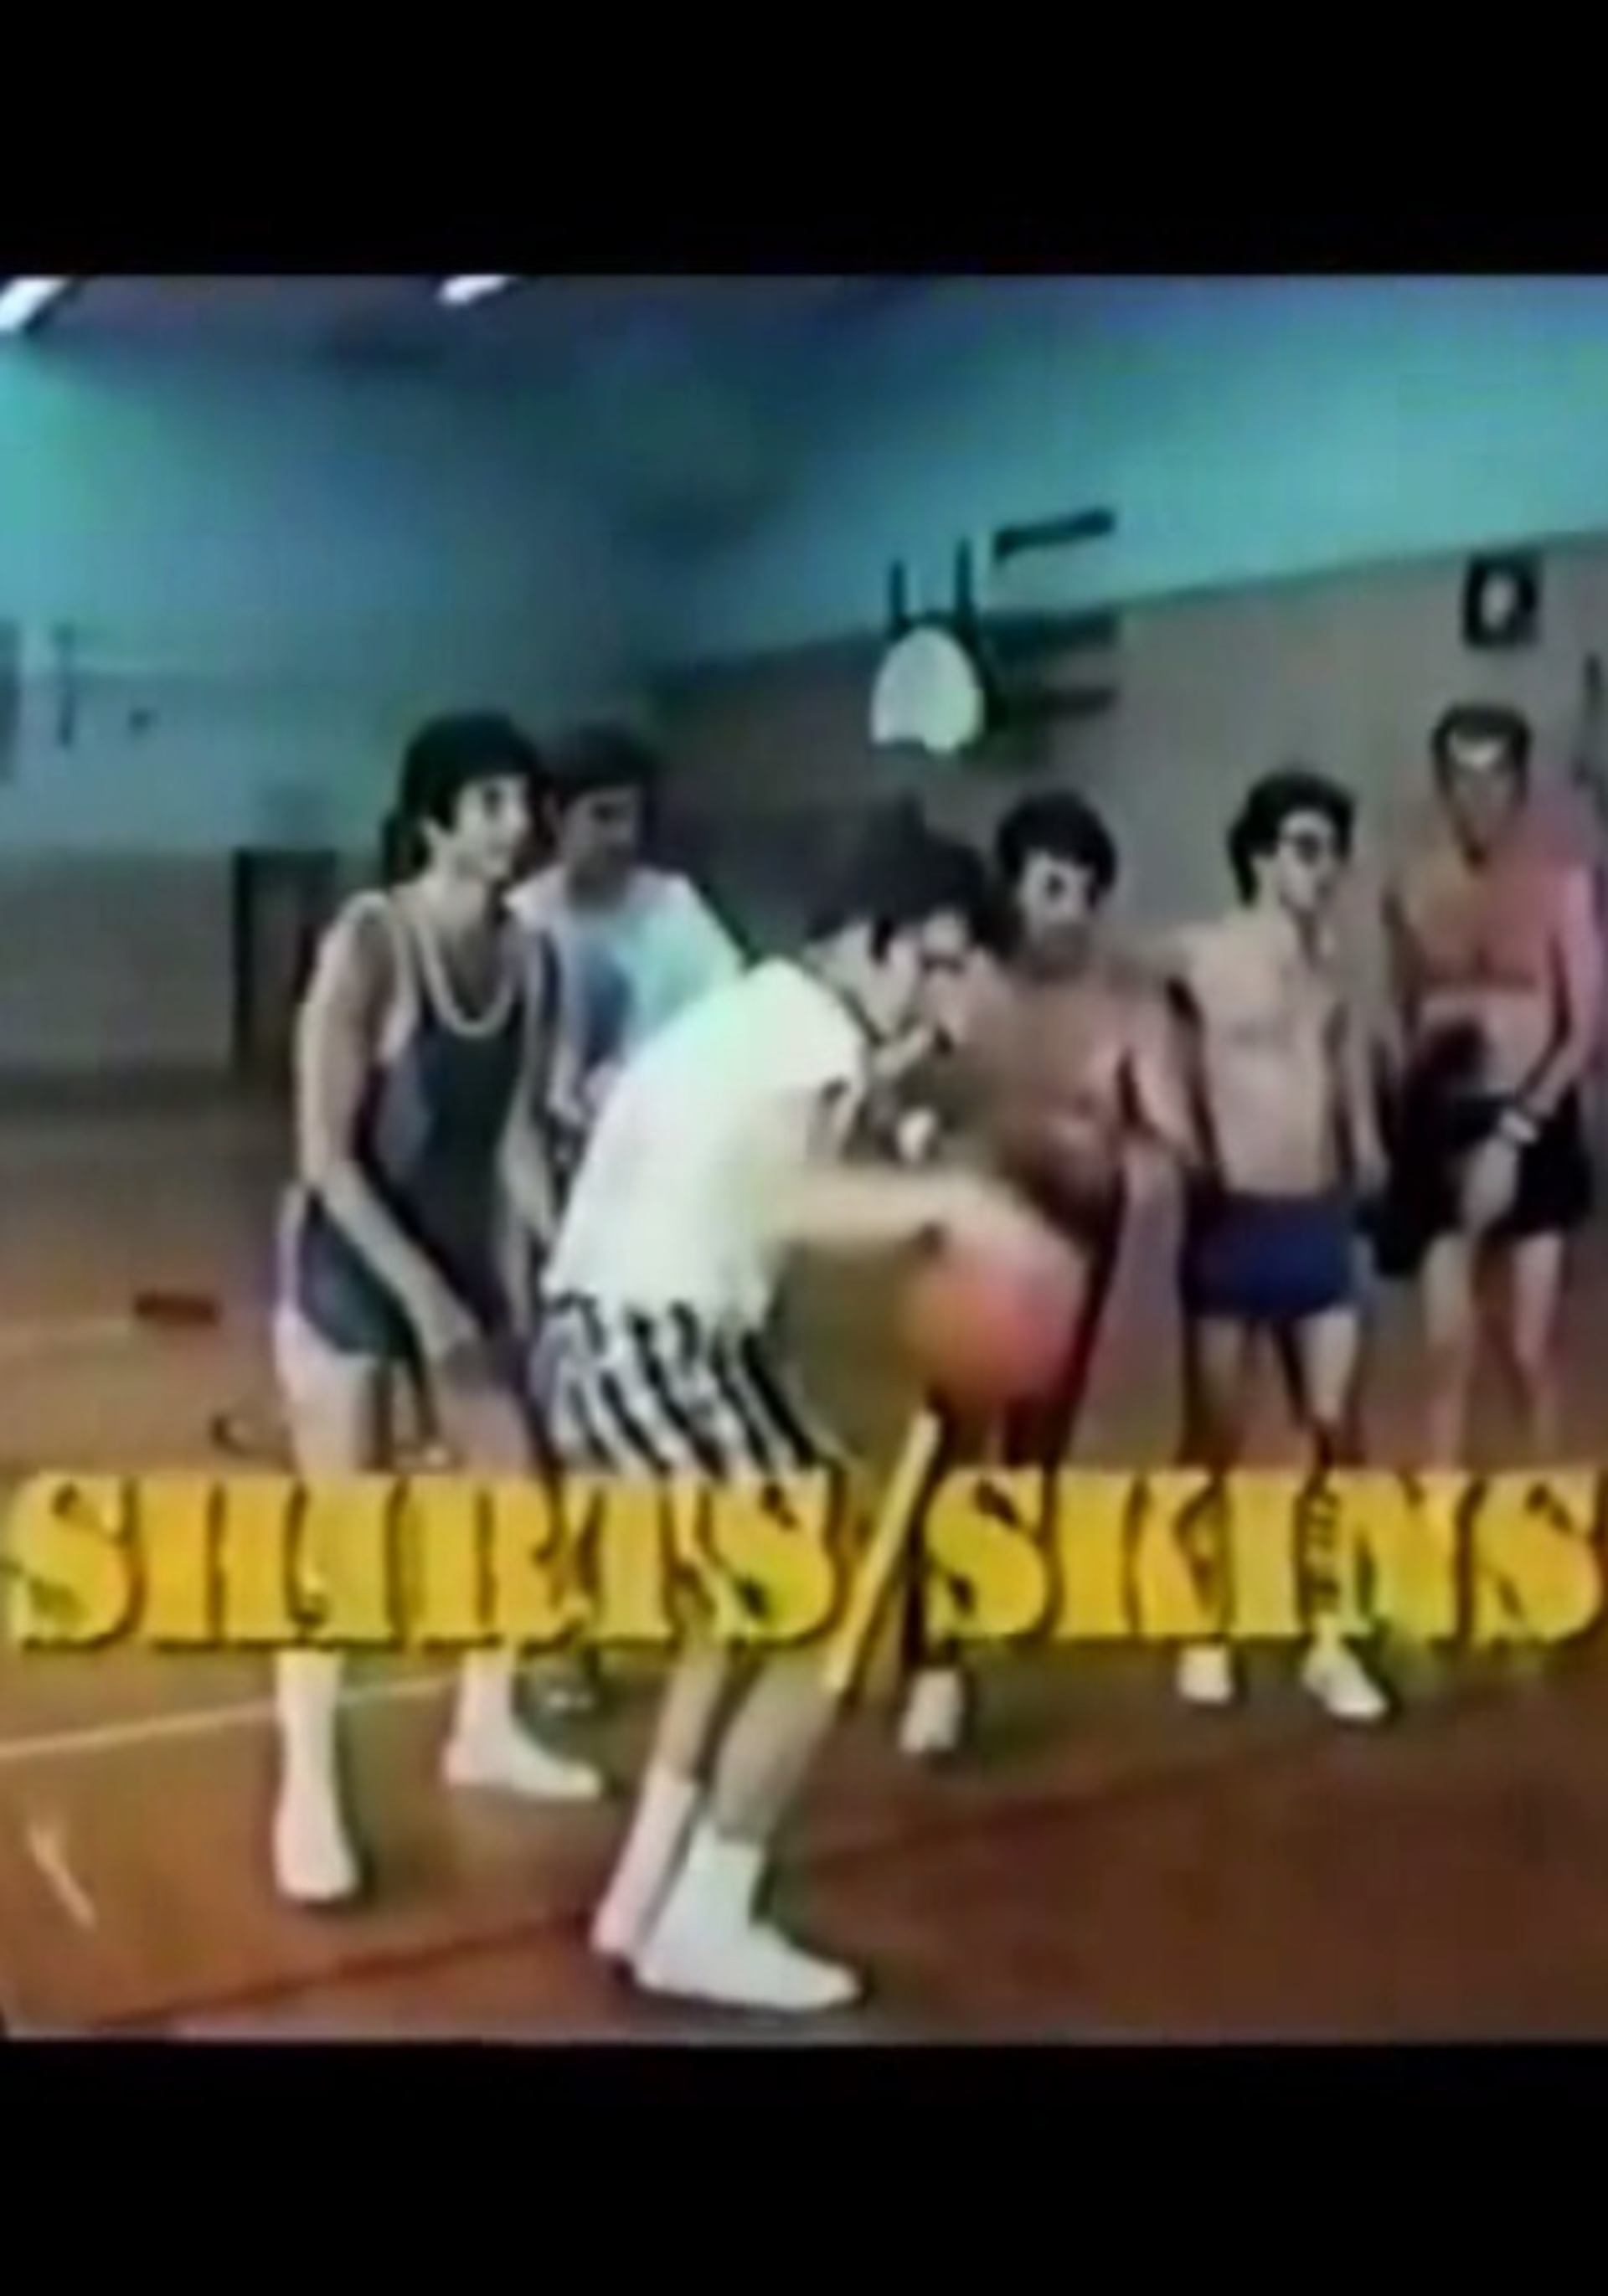 Shirts/Skins (1973) Screenshot 1 